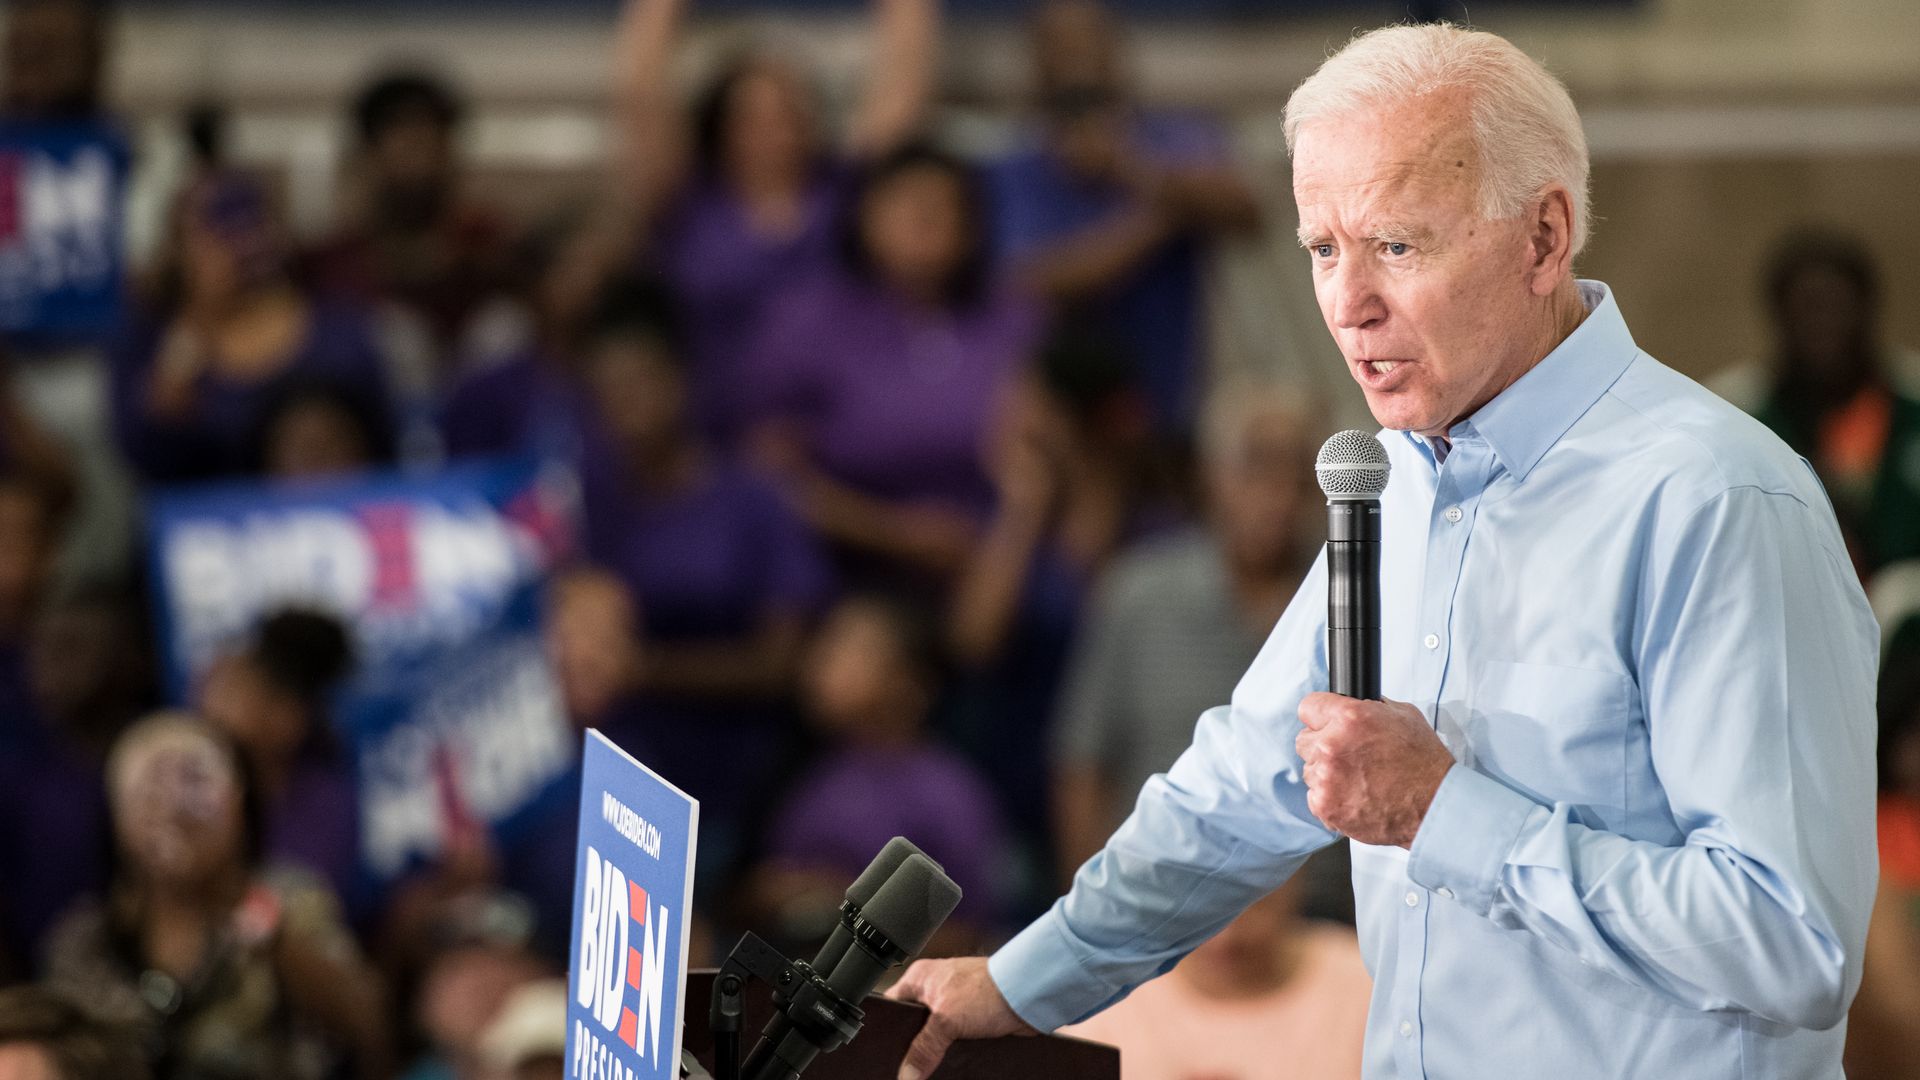 Former Vice President Joe Biden says Jim Crow laws are creeping back in.